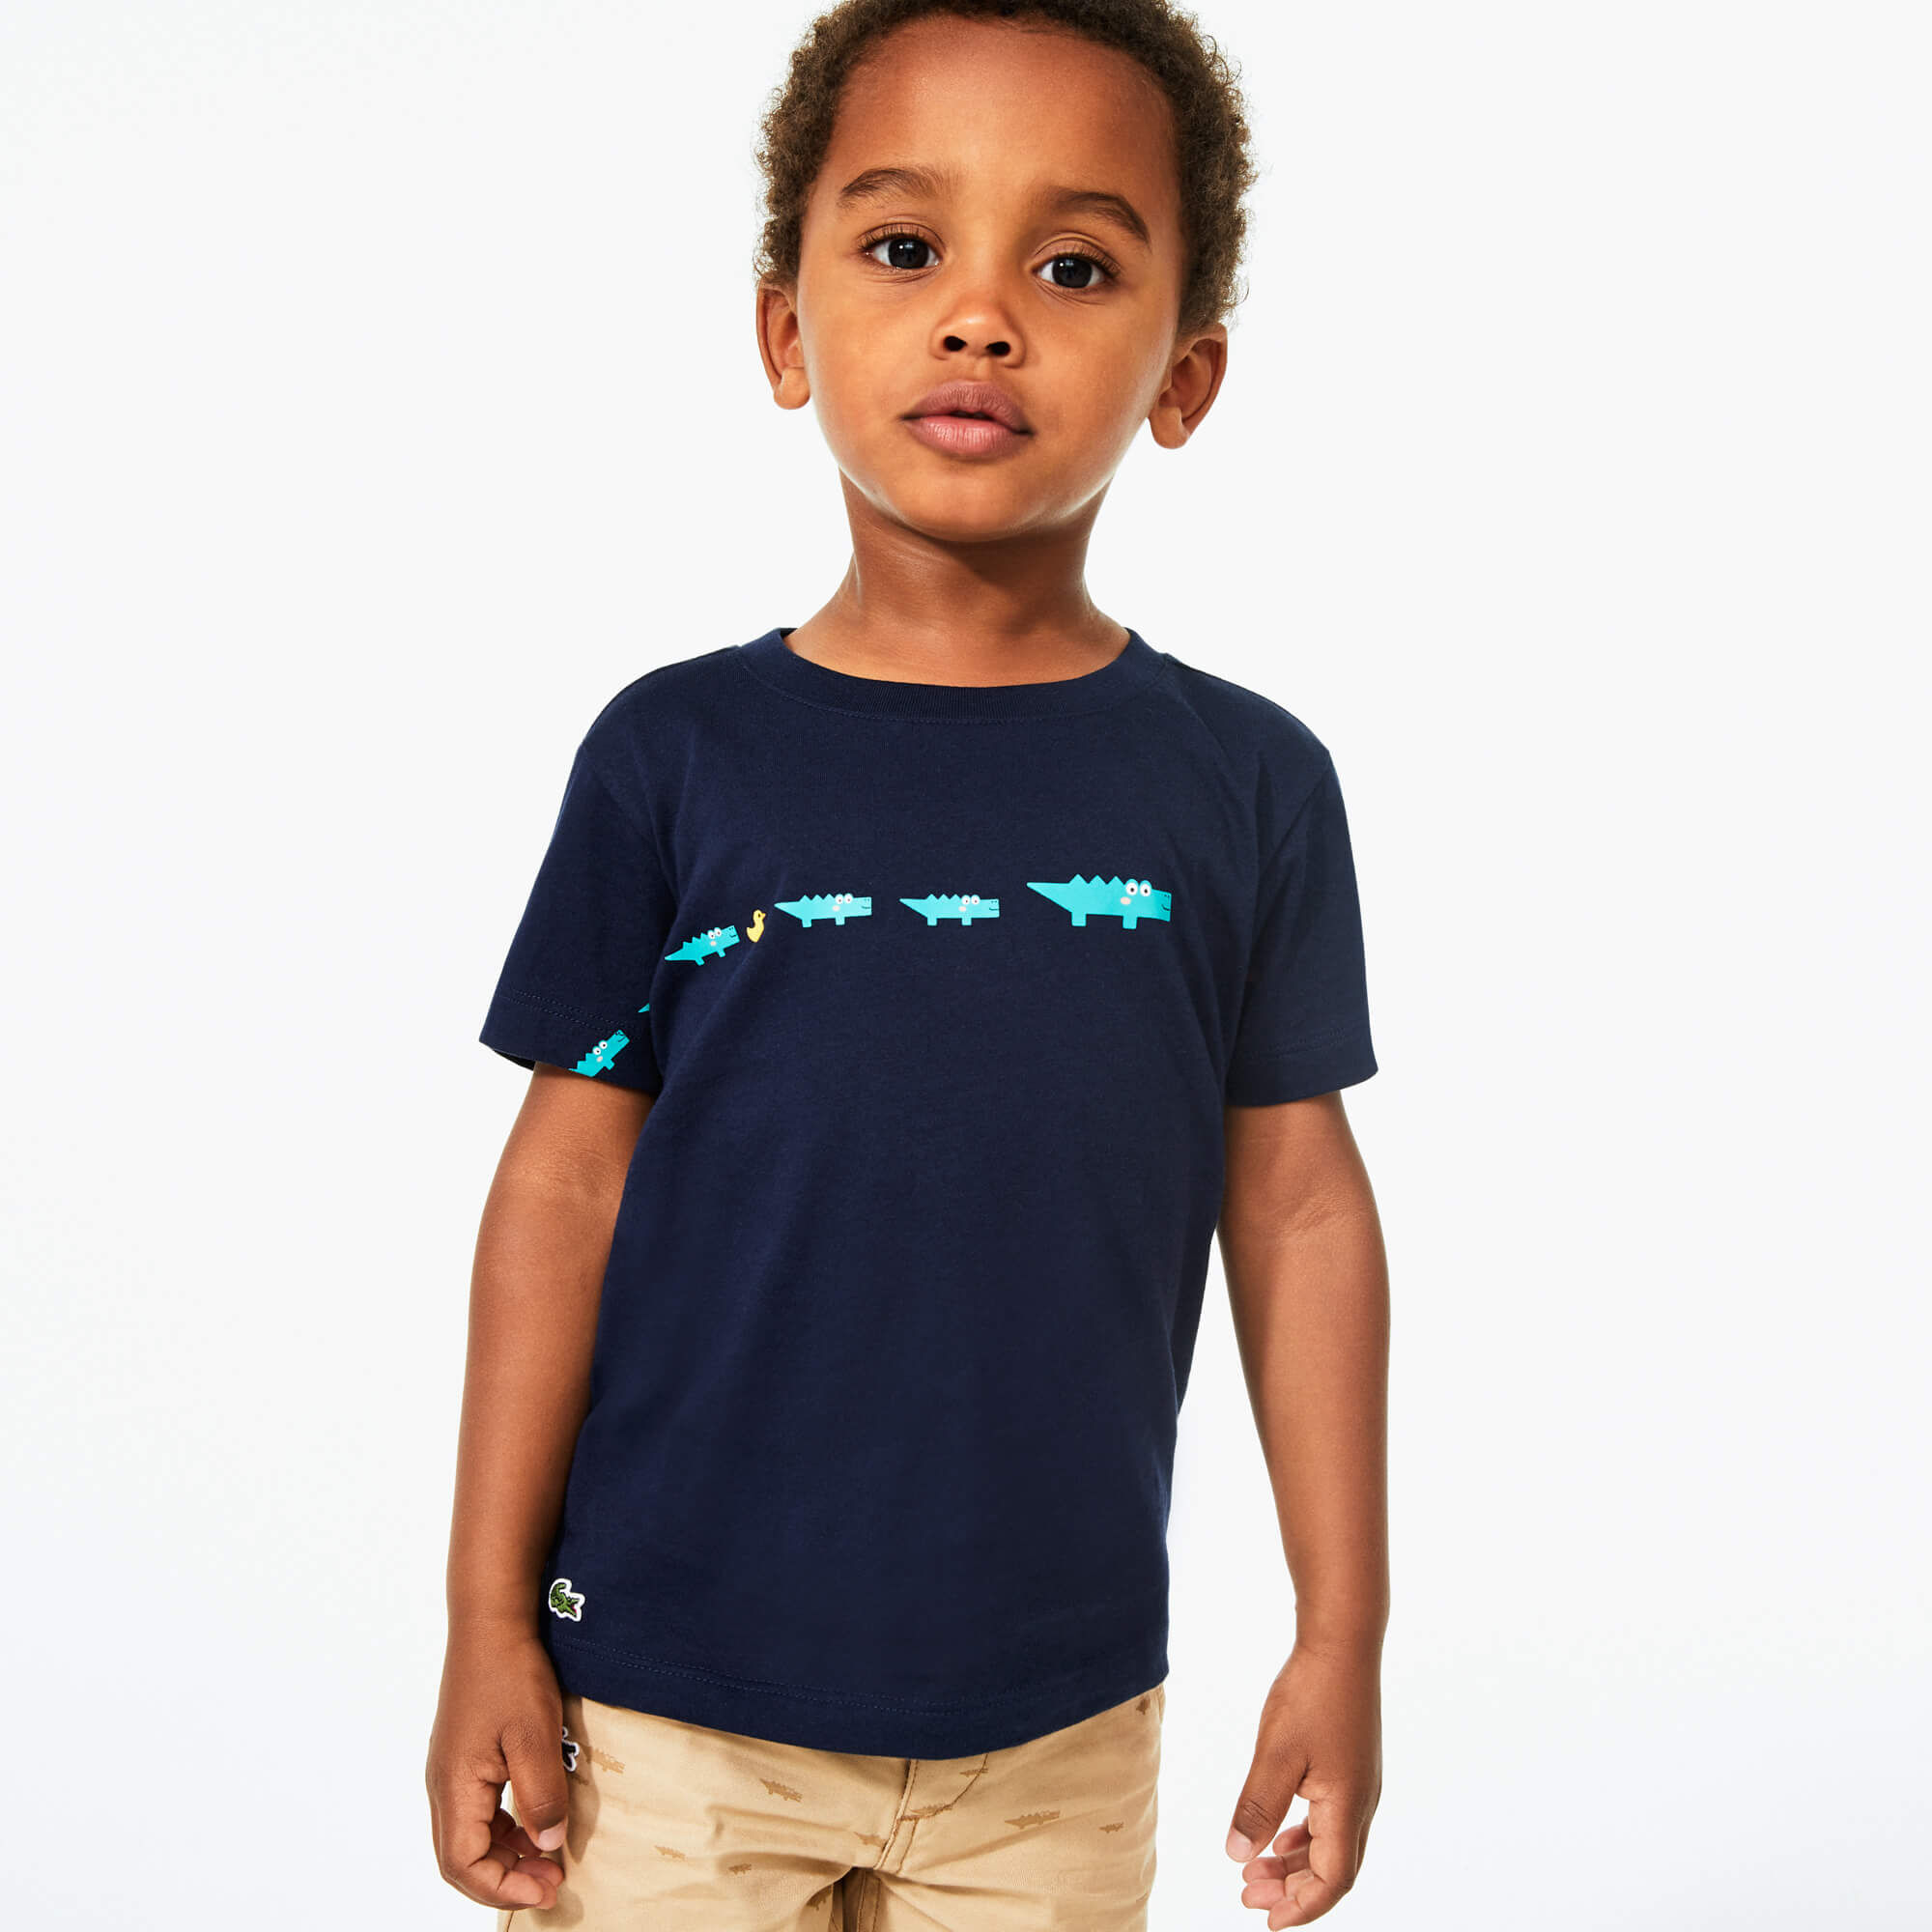 Boy’s Crew Neck Printed Cotton T-shirt